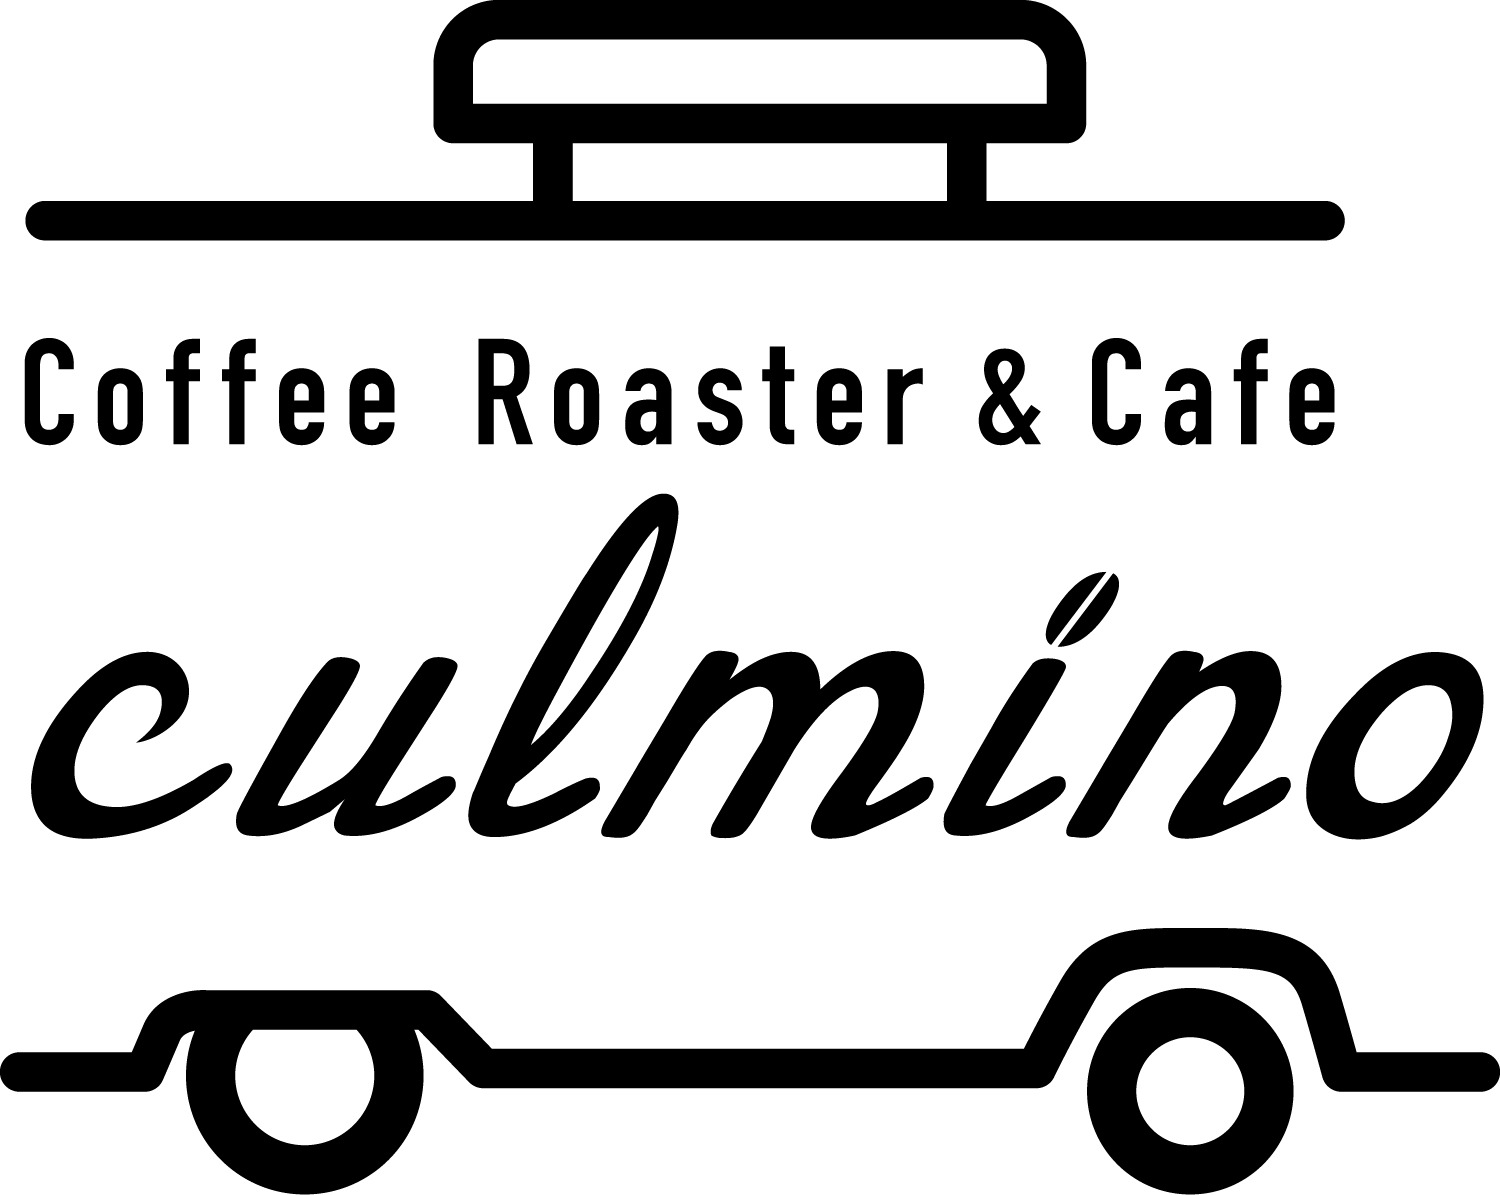 CoffeeRoaster&Cafe culmino　ｺｰﾋｰﾛｰｽﾀｰｱﾝﾄﾞｶﾌｪ ｸﾙﾐｰﾉ